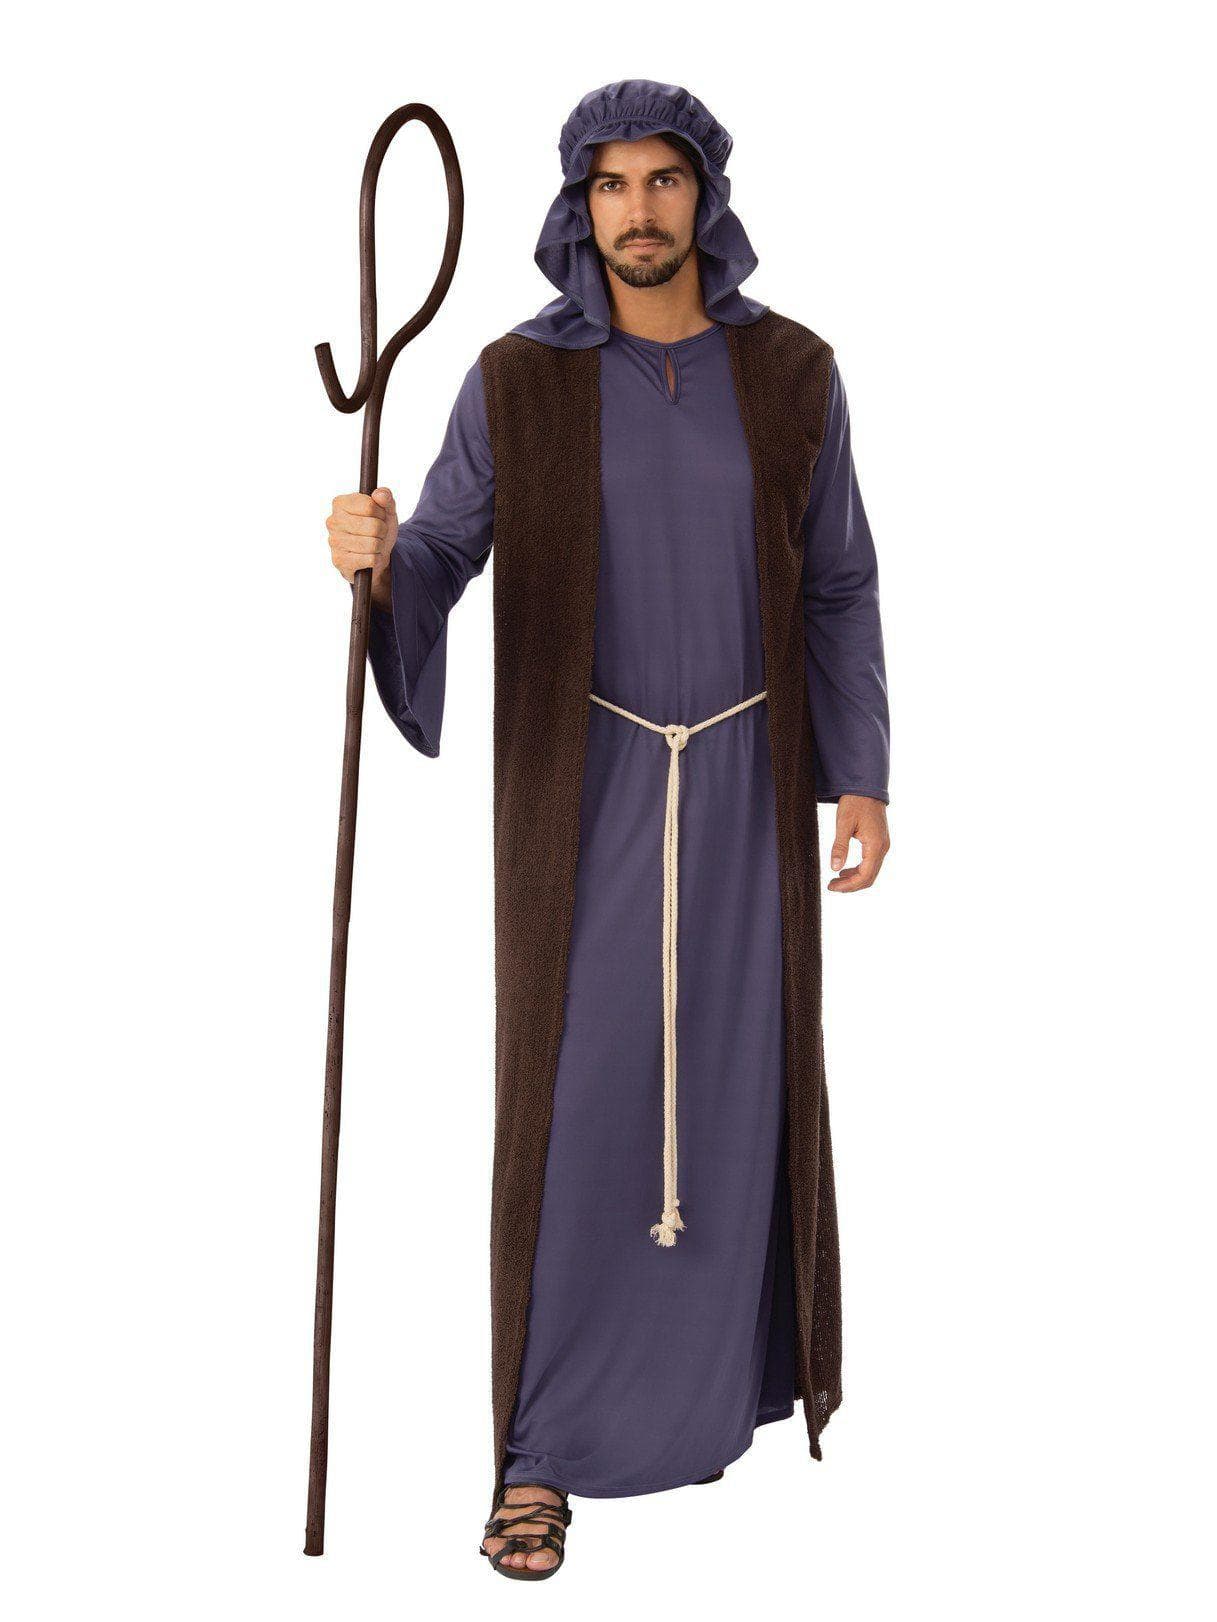 Adult Joseph Costume - costumes.com